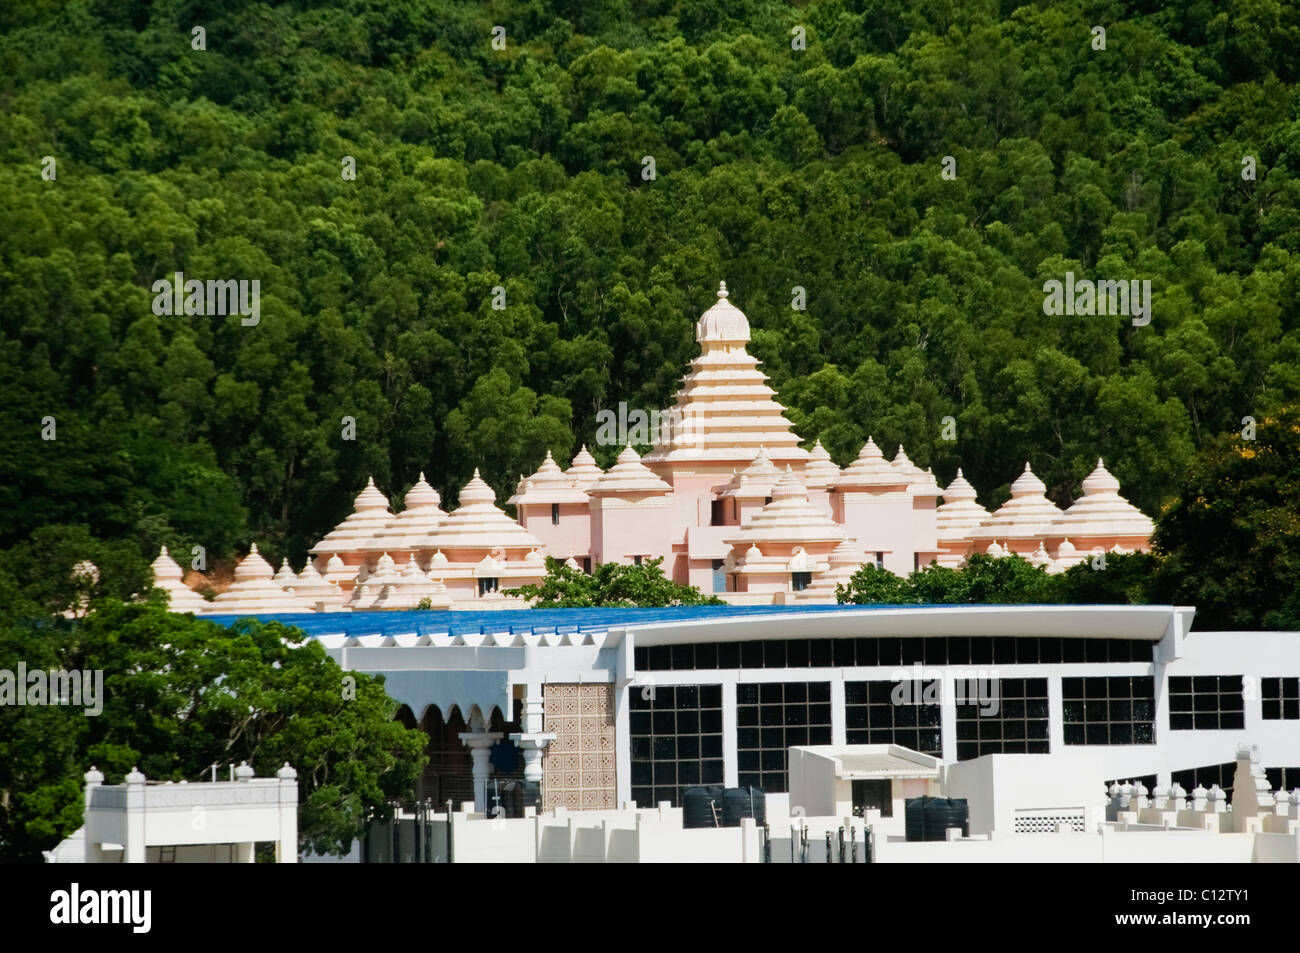 Sri venkateswara museum hi-res stock photography and images - Alamy